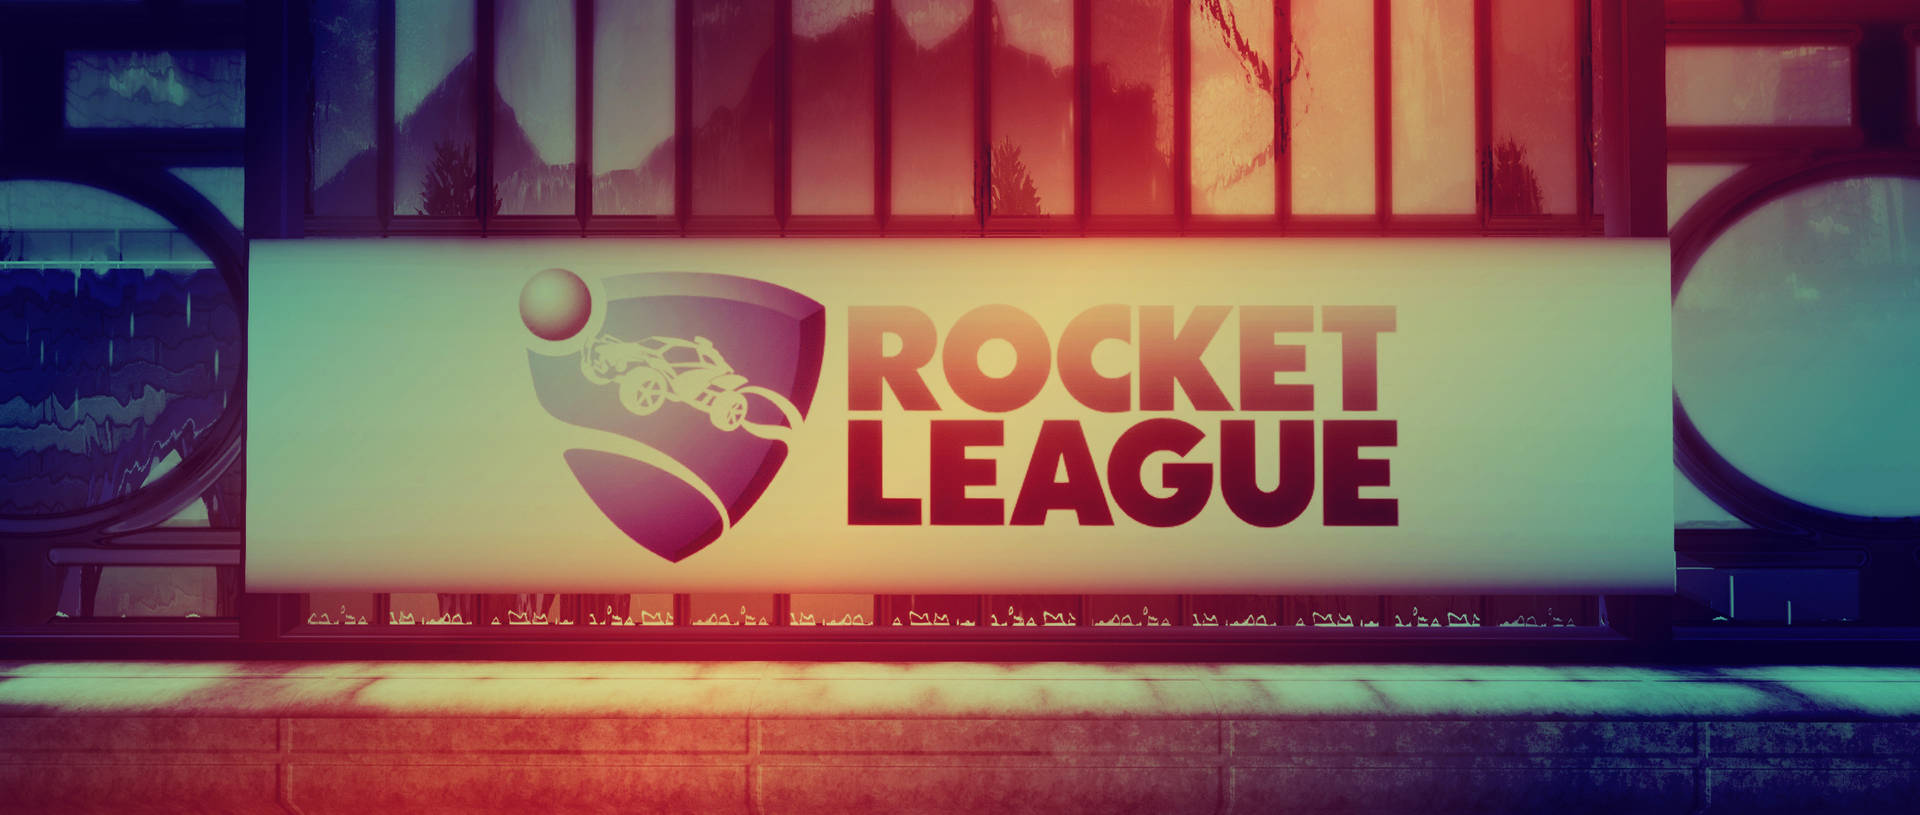 Cool Rocket League Logo Wallpaper